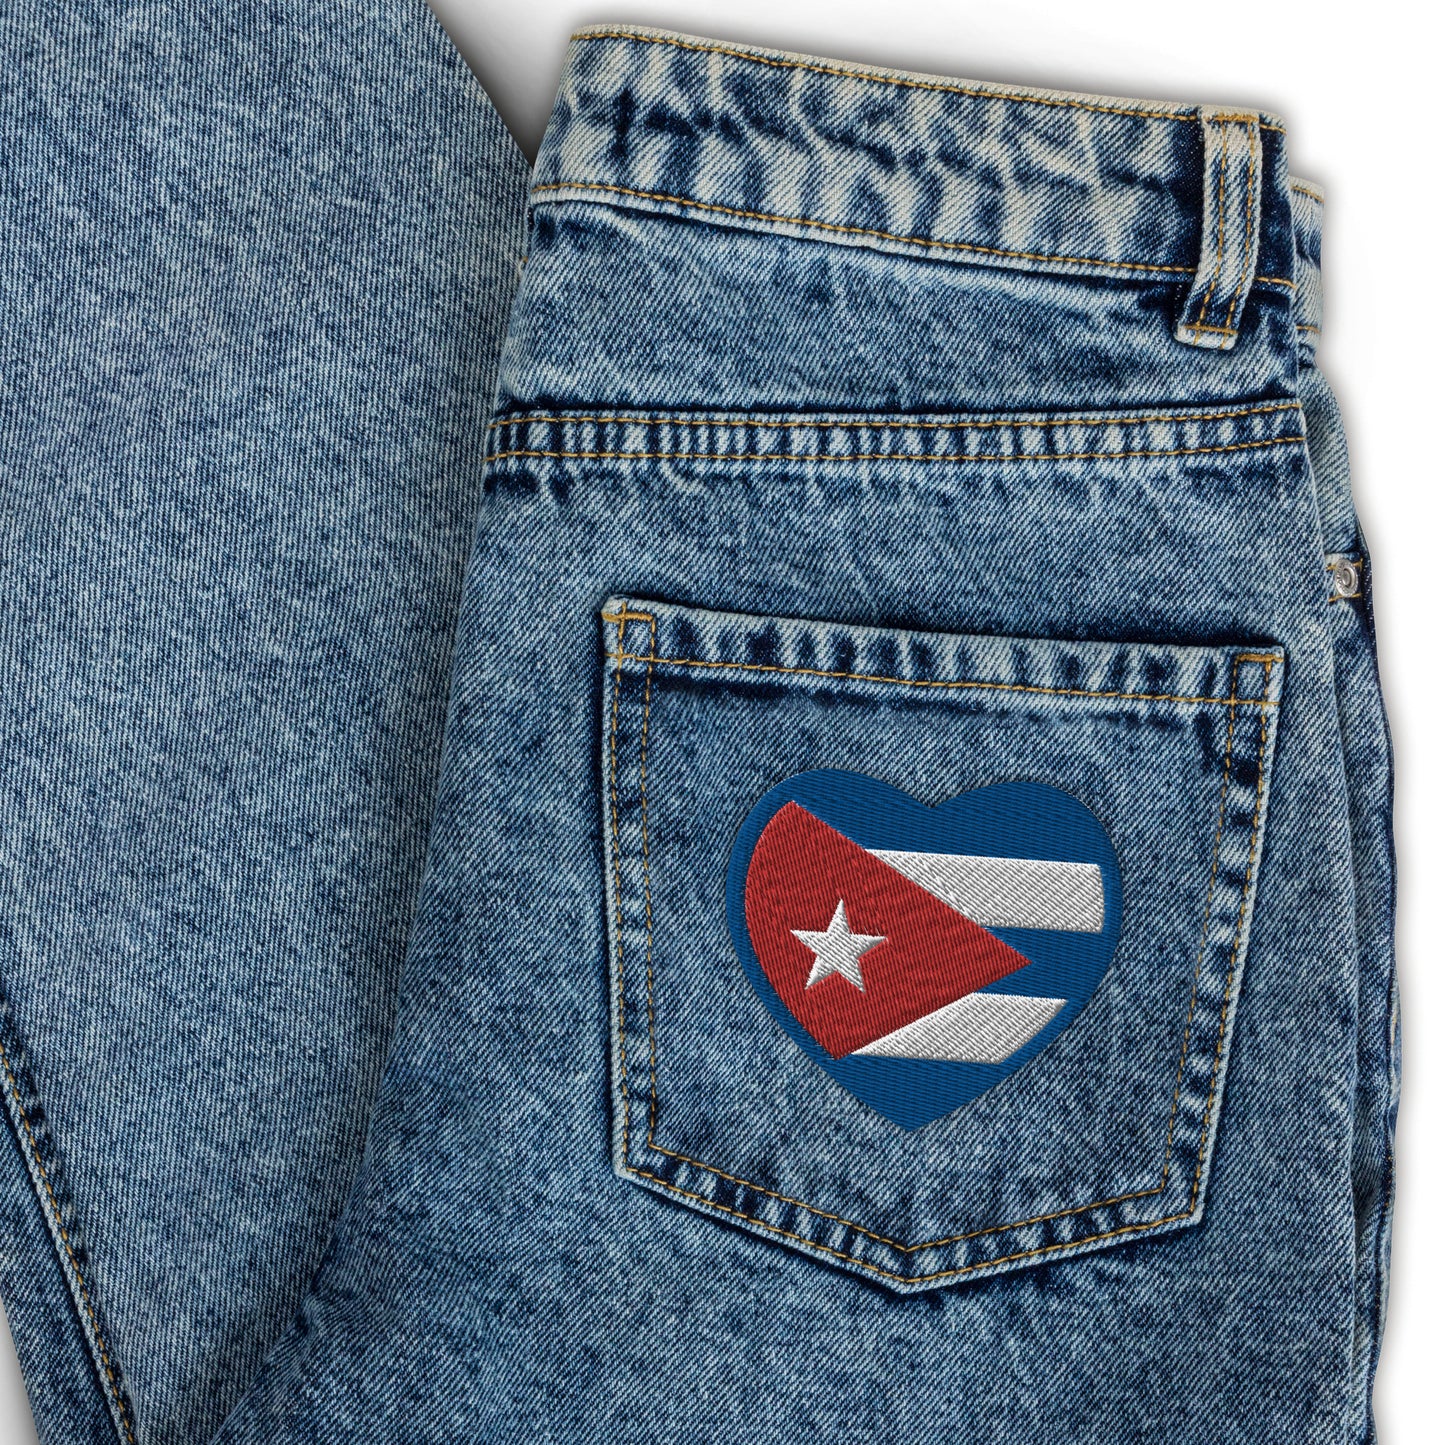 High-quality Cuba flag patch